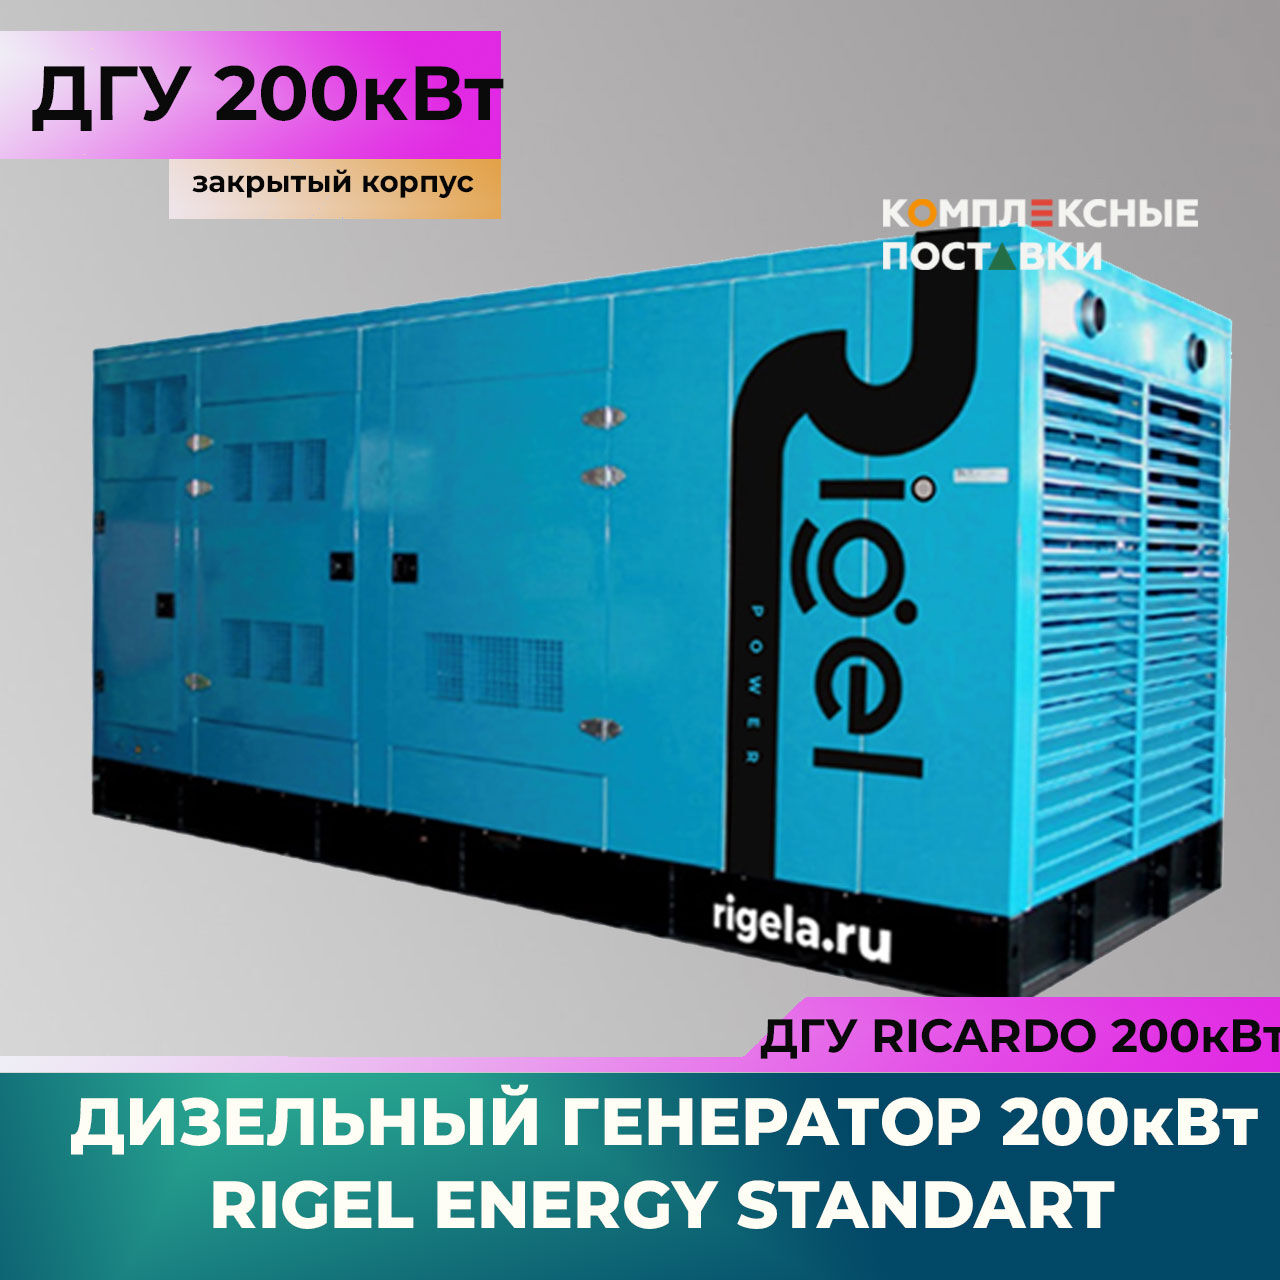 ДГУ 200кВт Ricardo R Дизель-генератор Rigel Energy Standard RES 200 (200 кВт, Ricardo R) закрытый